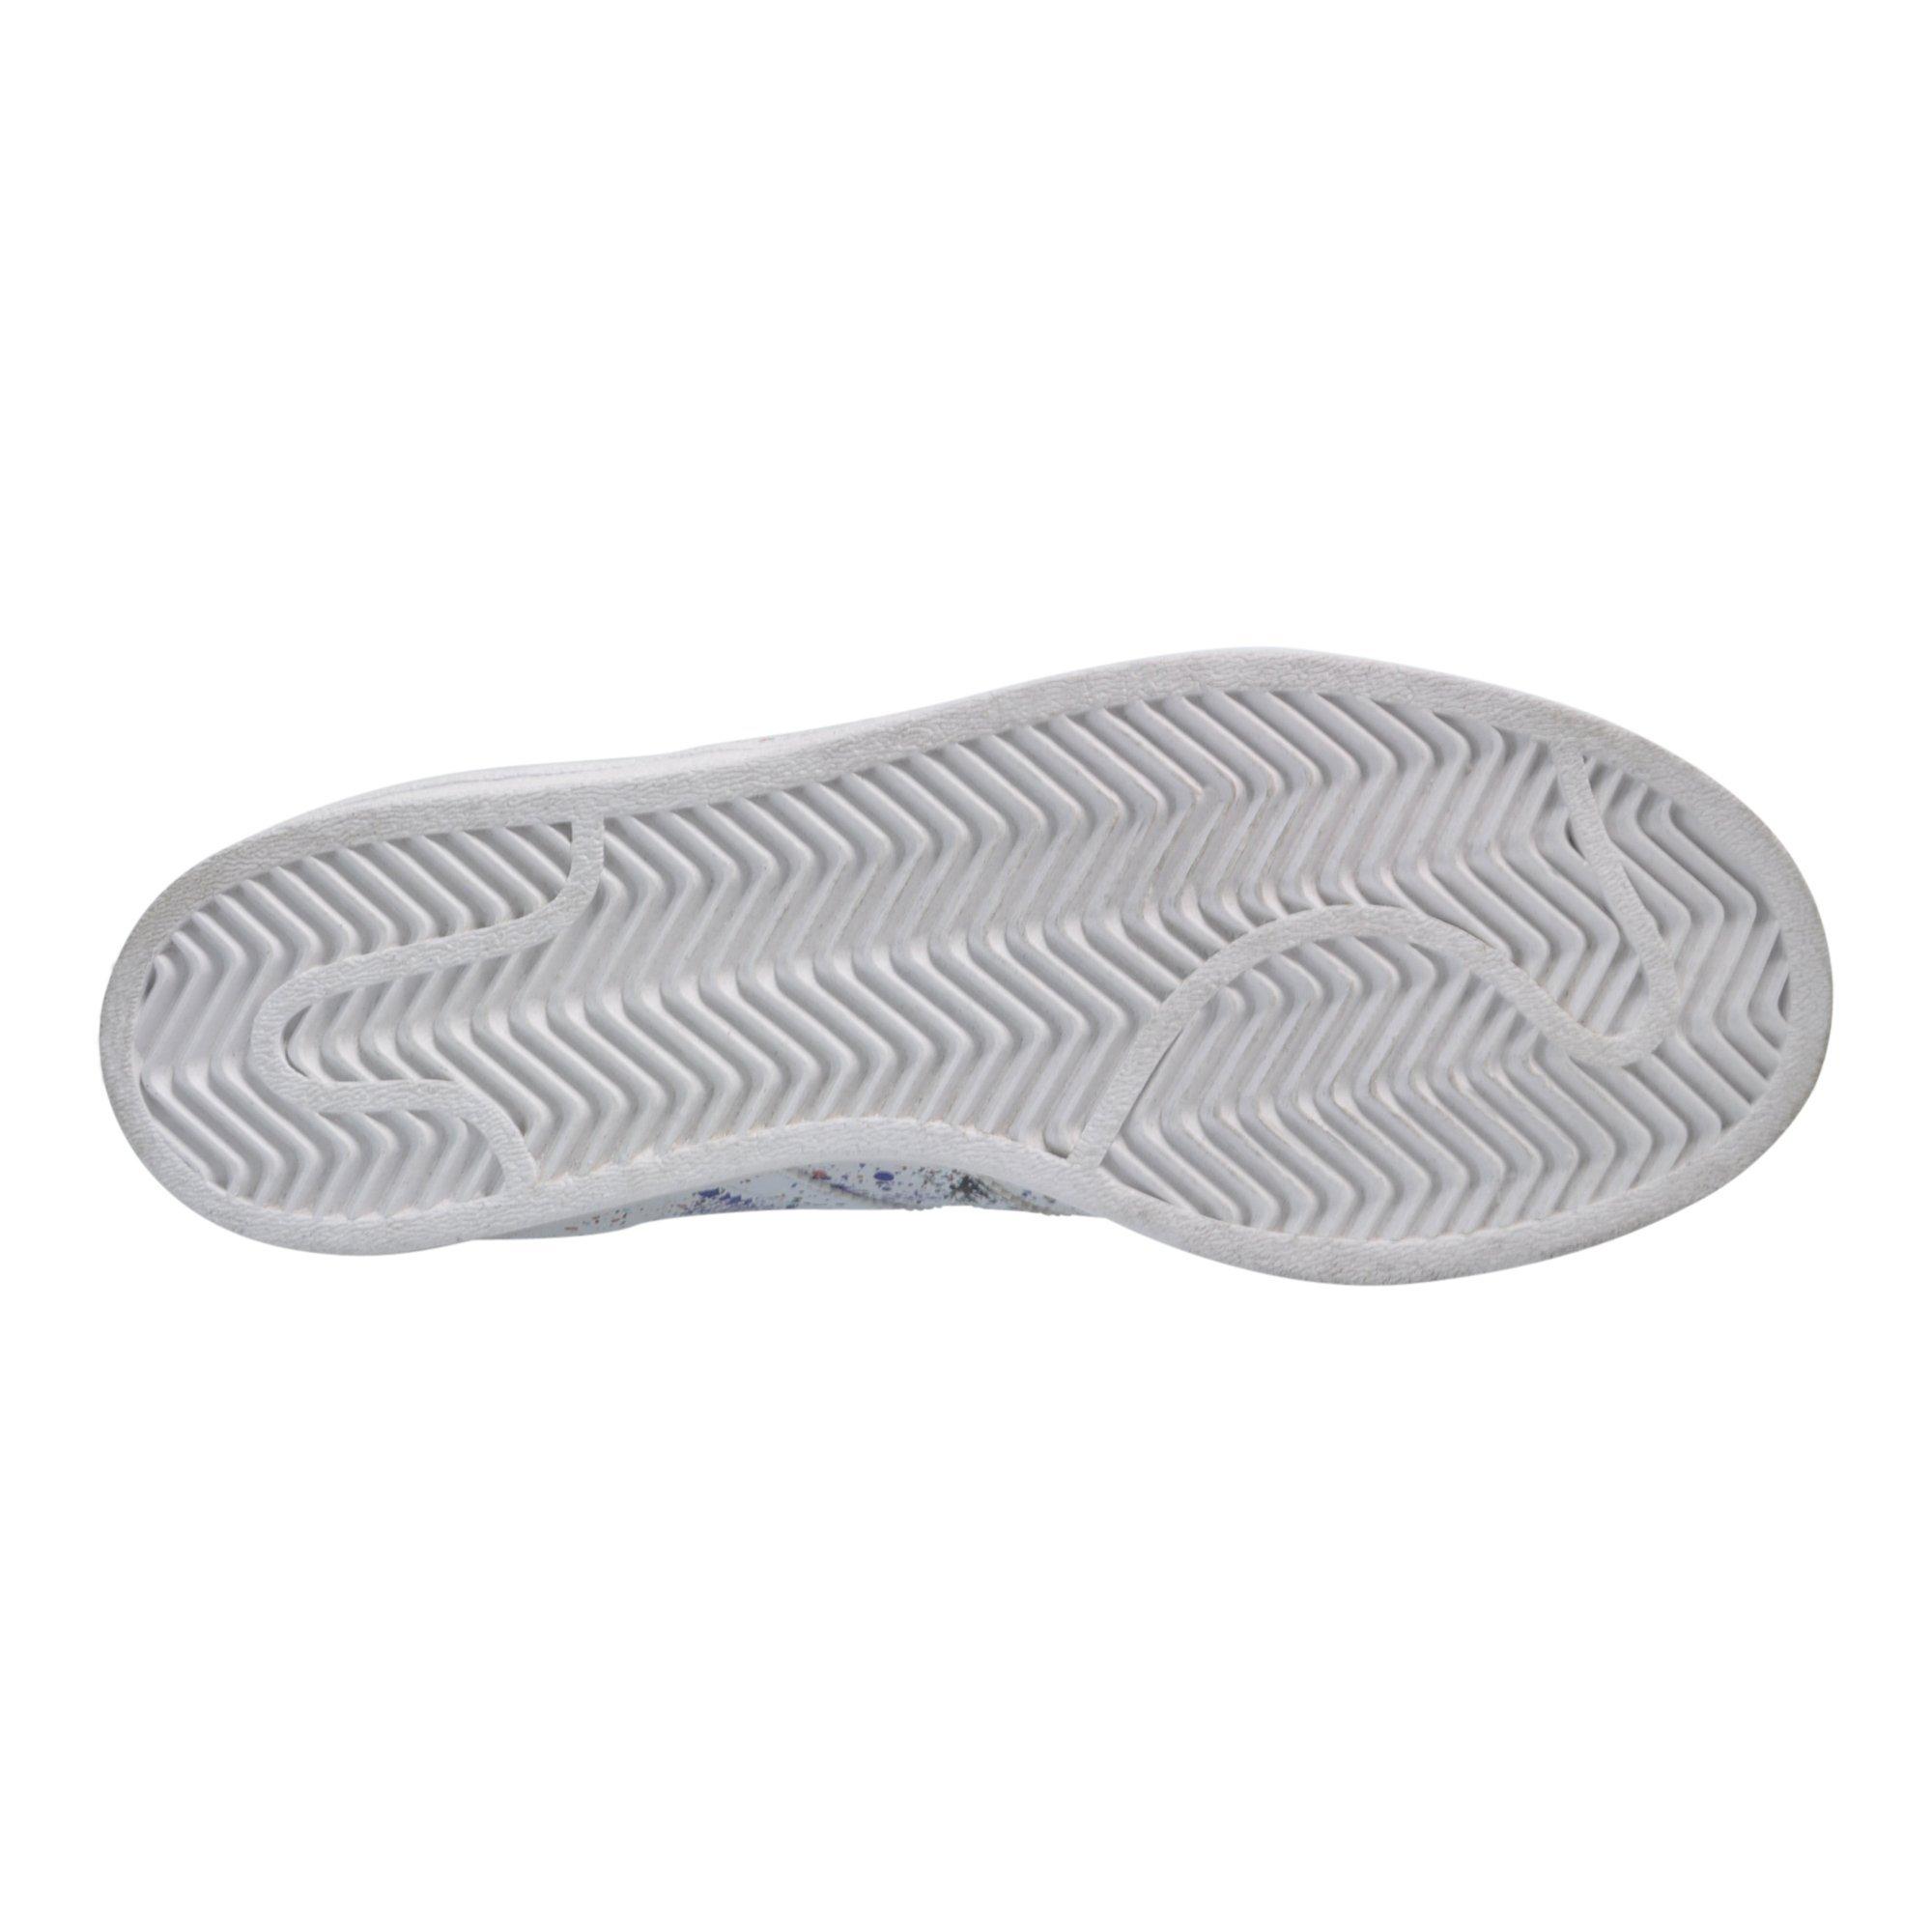 adidas shell toe skate shoes